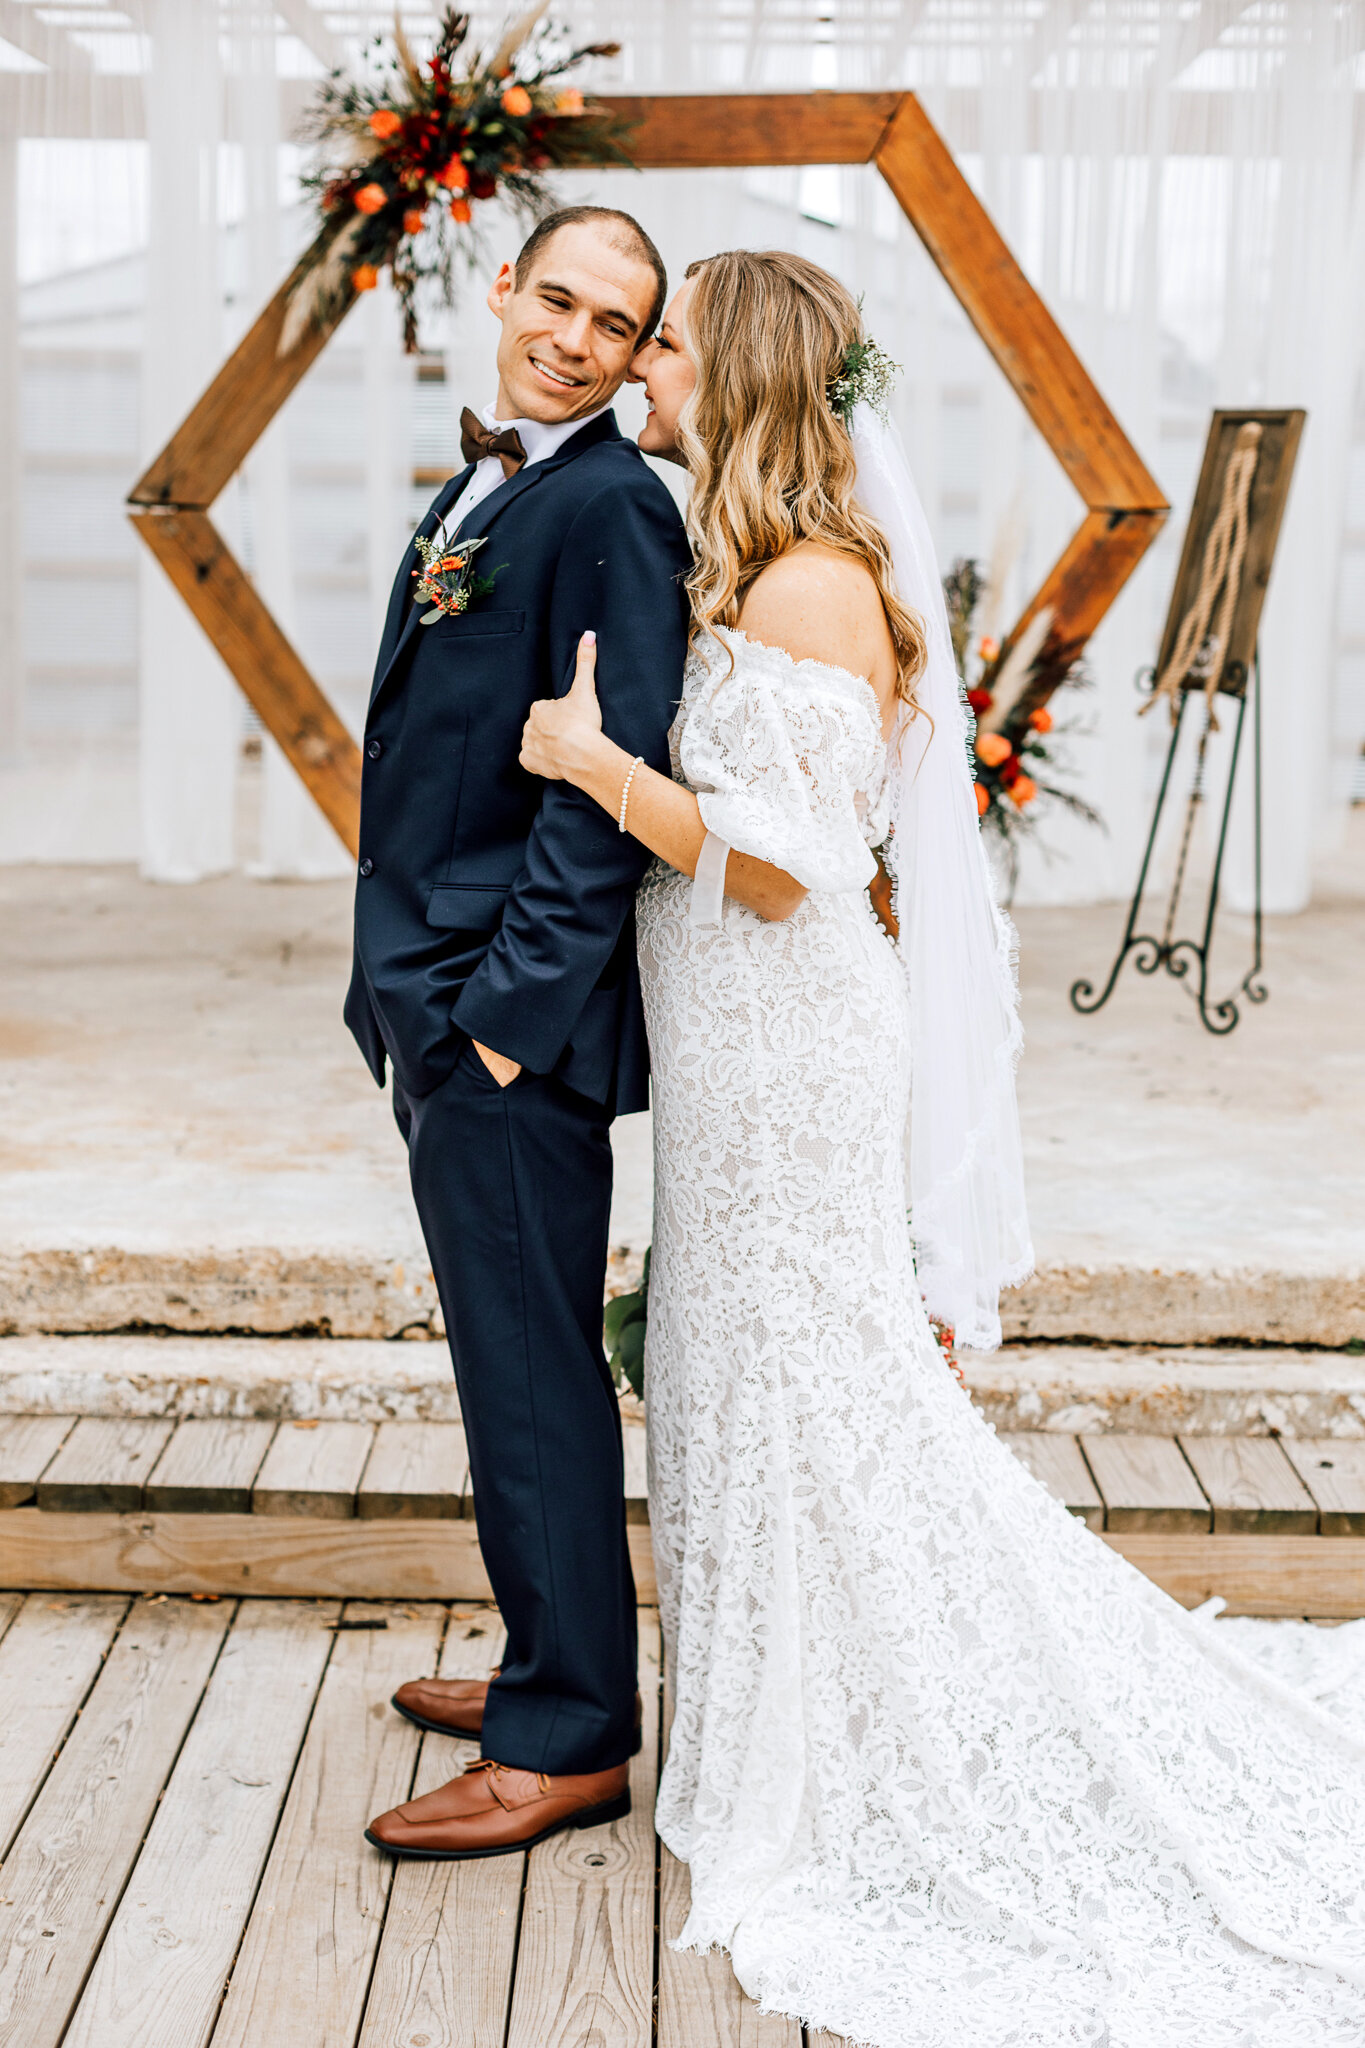 The Glass Factory Wedding | Jonesboro Arkansas Wedding Photographer